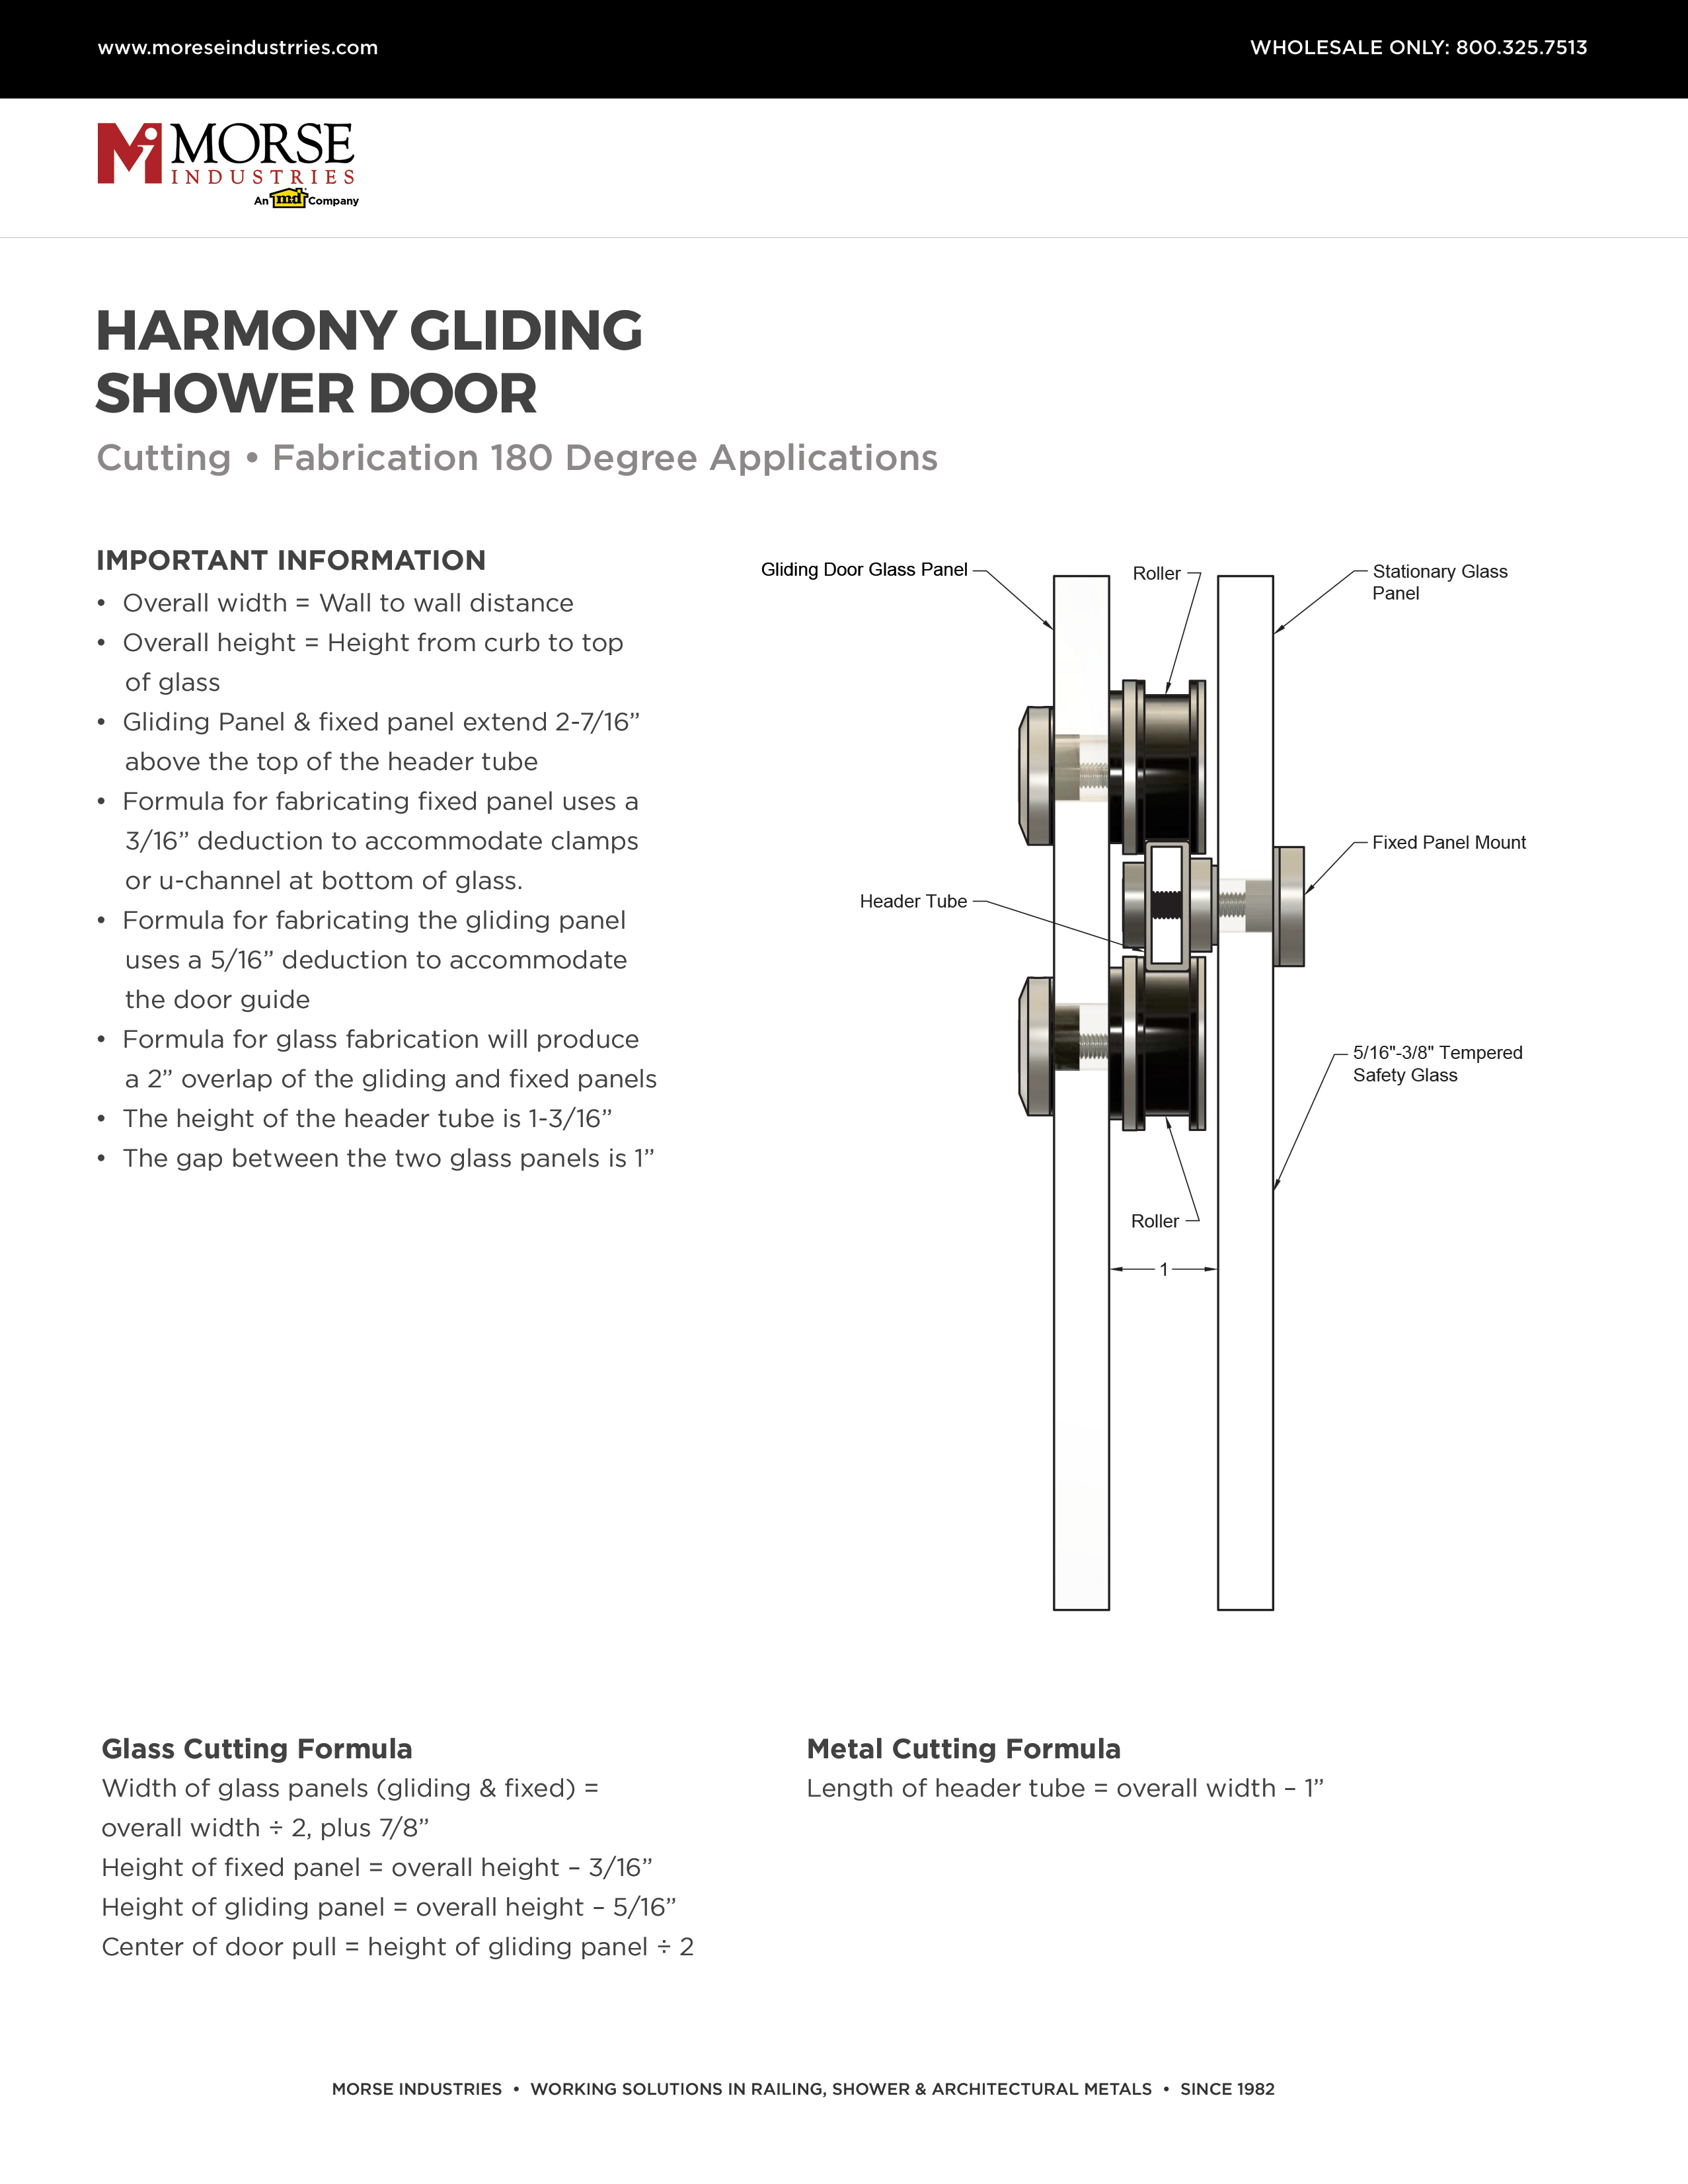 Harmony Gliding Shower Glass Fabrication